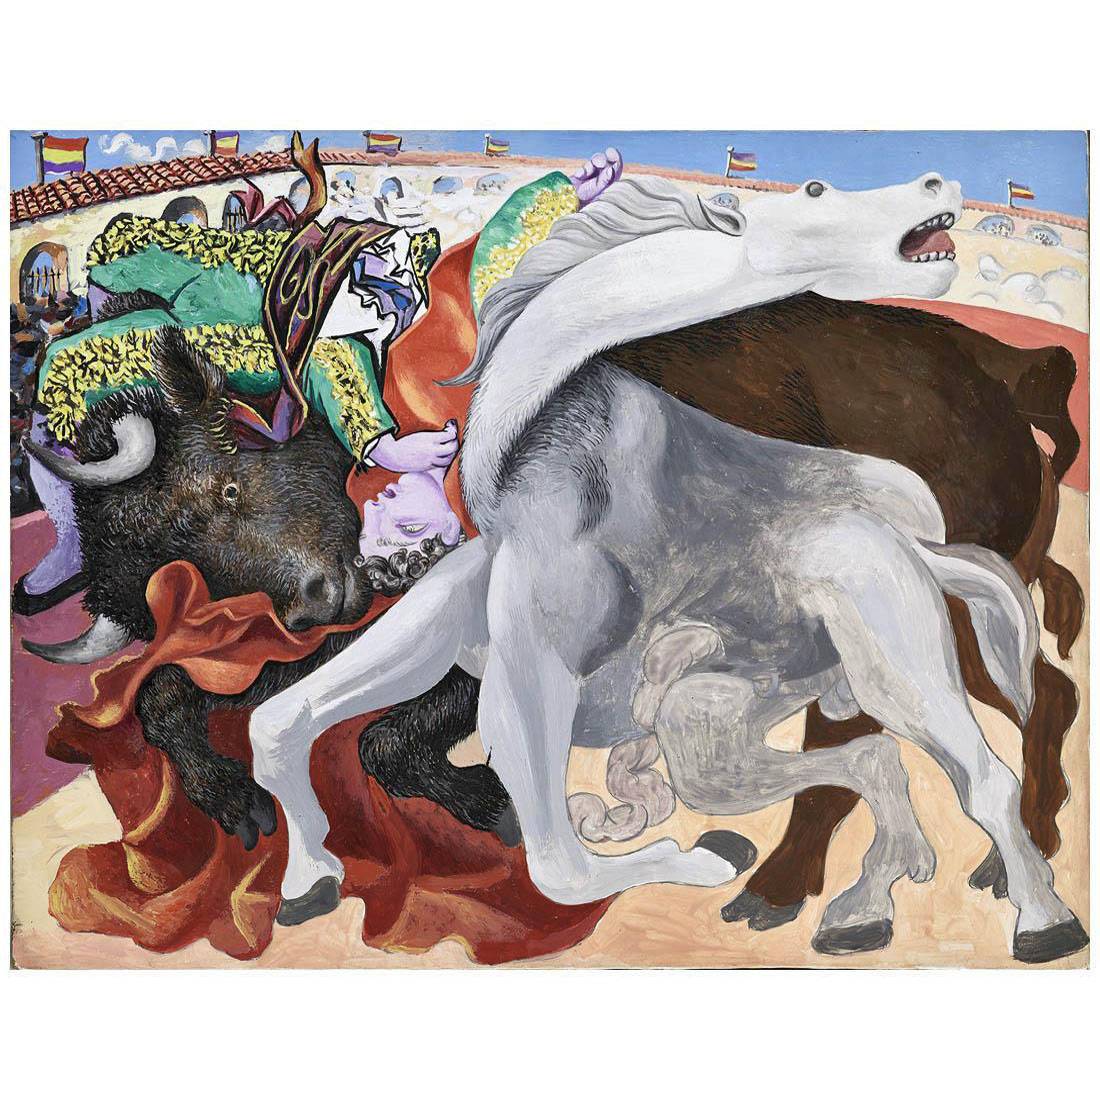 Pablo Picasso. Corrida (La mort du torero). 1933. Musee Picasso, Paris